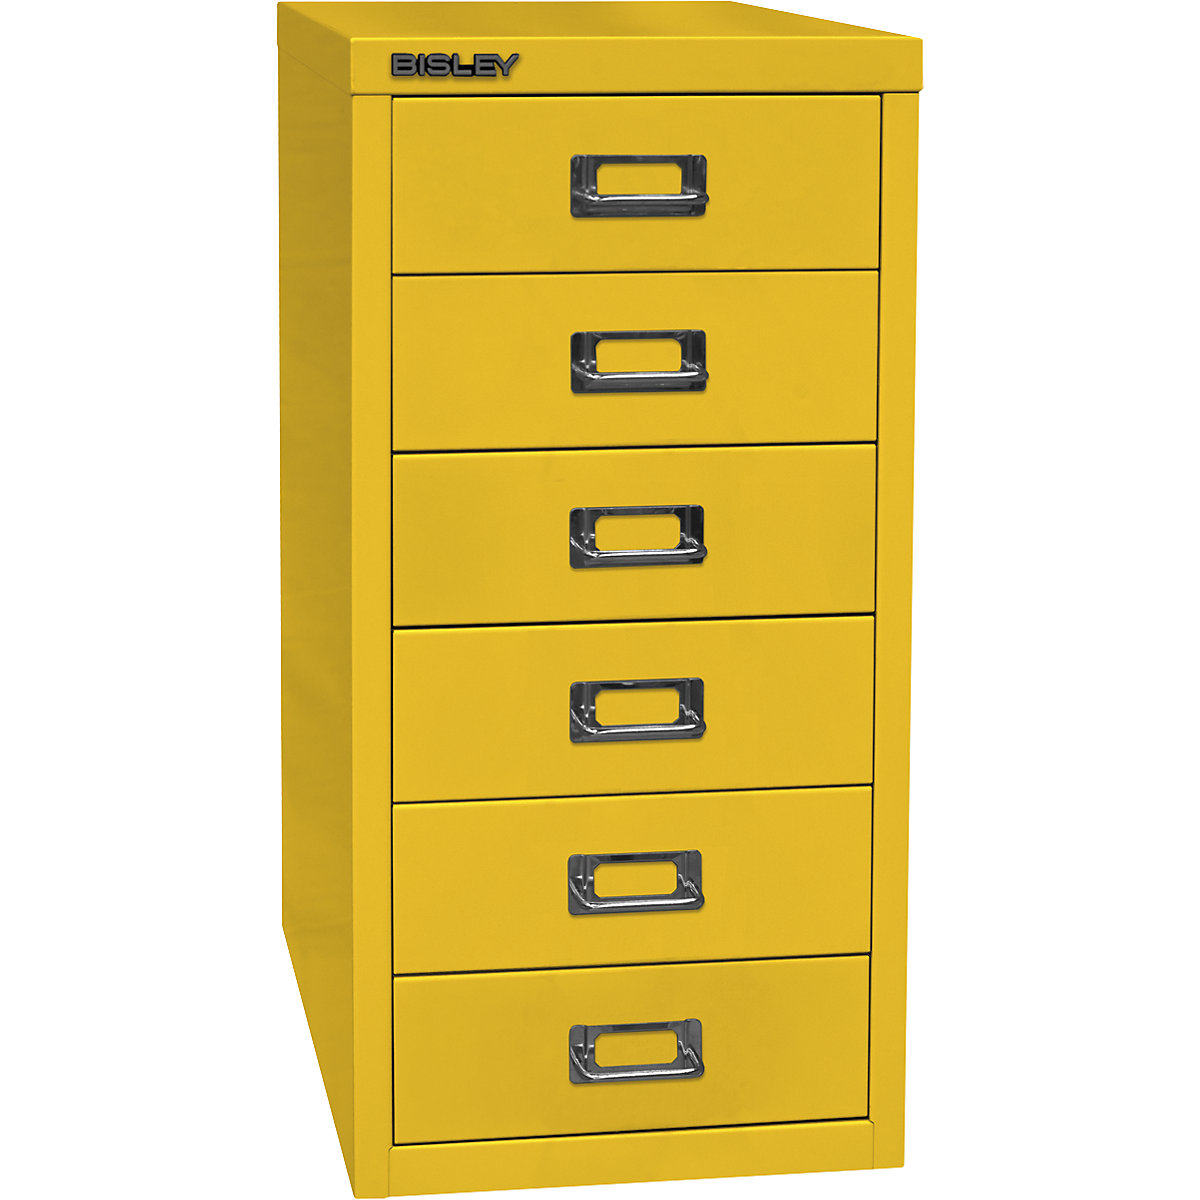 MultiDrawer™ 29 series – BISLEY, A4, 6 drawers, yellow-10